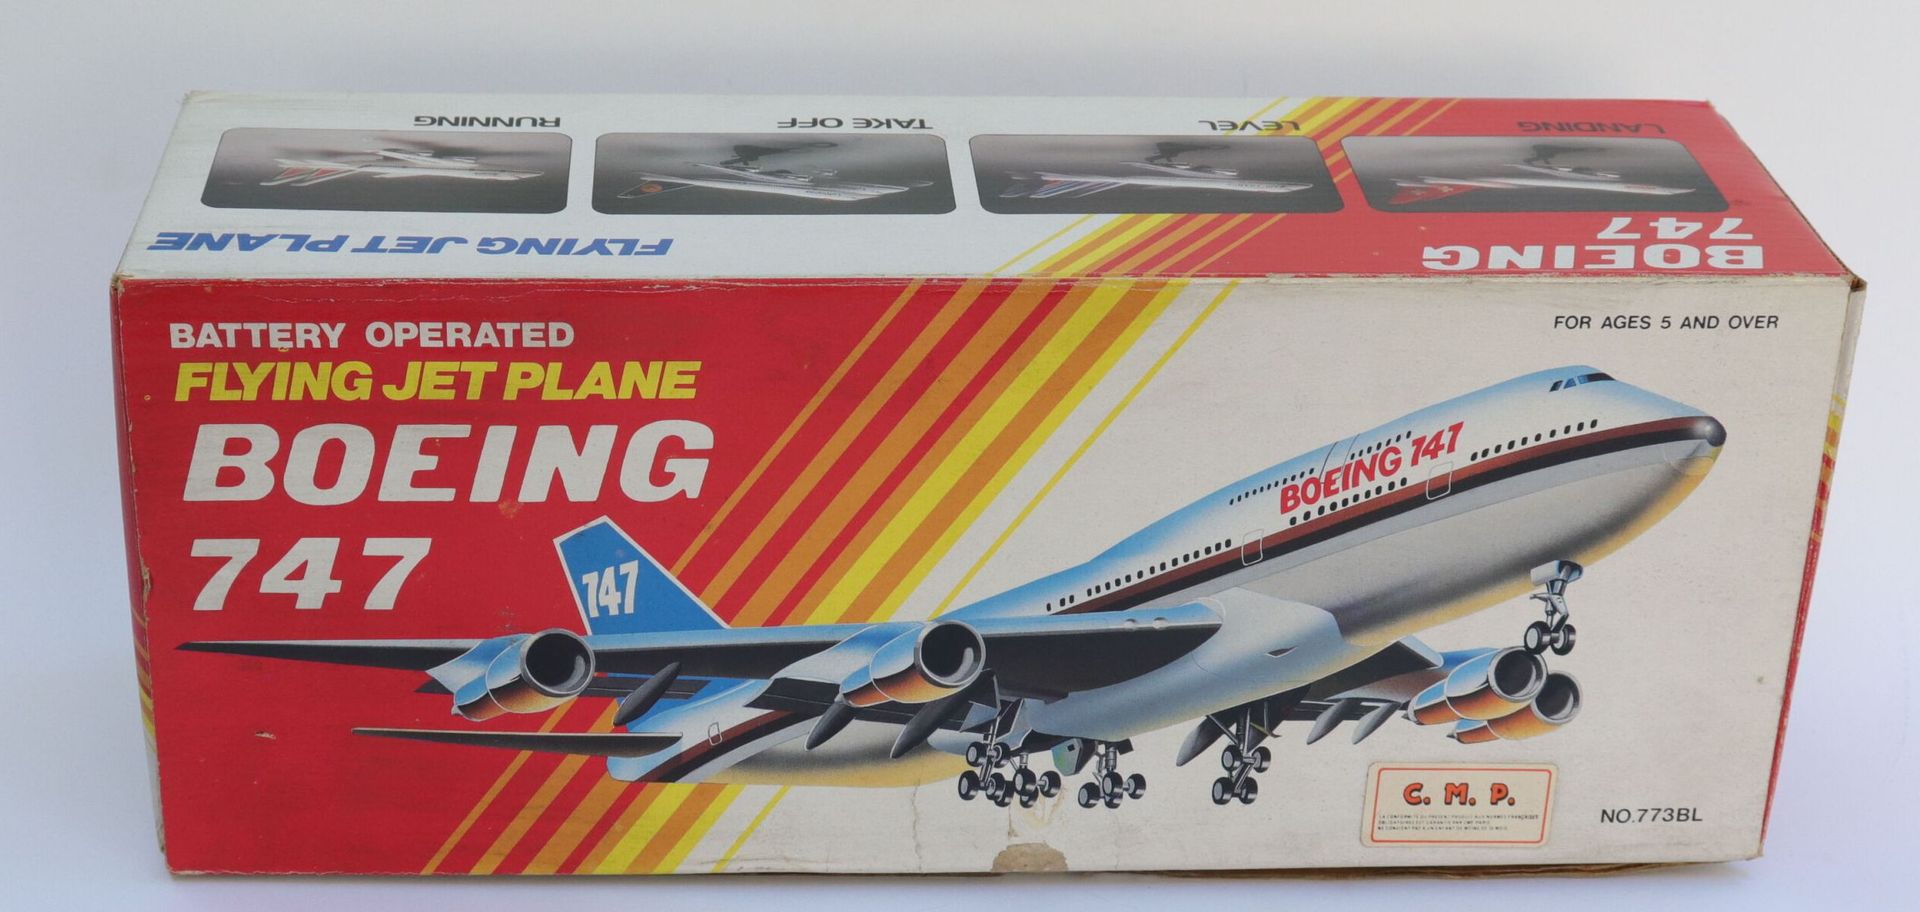 Null BOEING B-747 AIR FRANCE.

Aereo giocattolo in resina e plastica.

Giocattol&hellip;